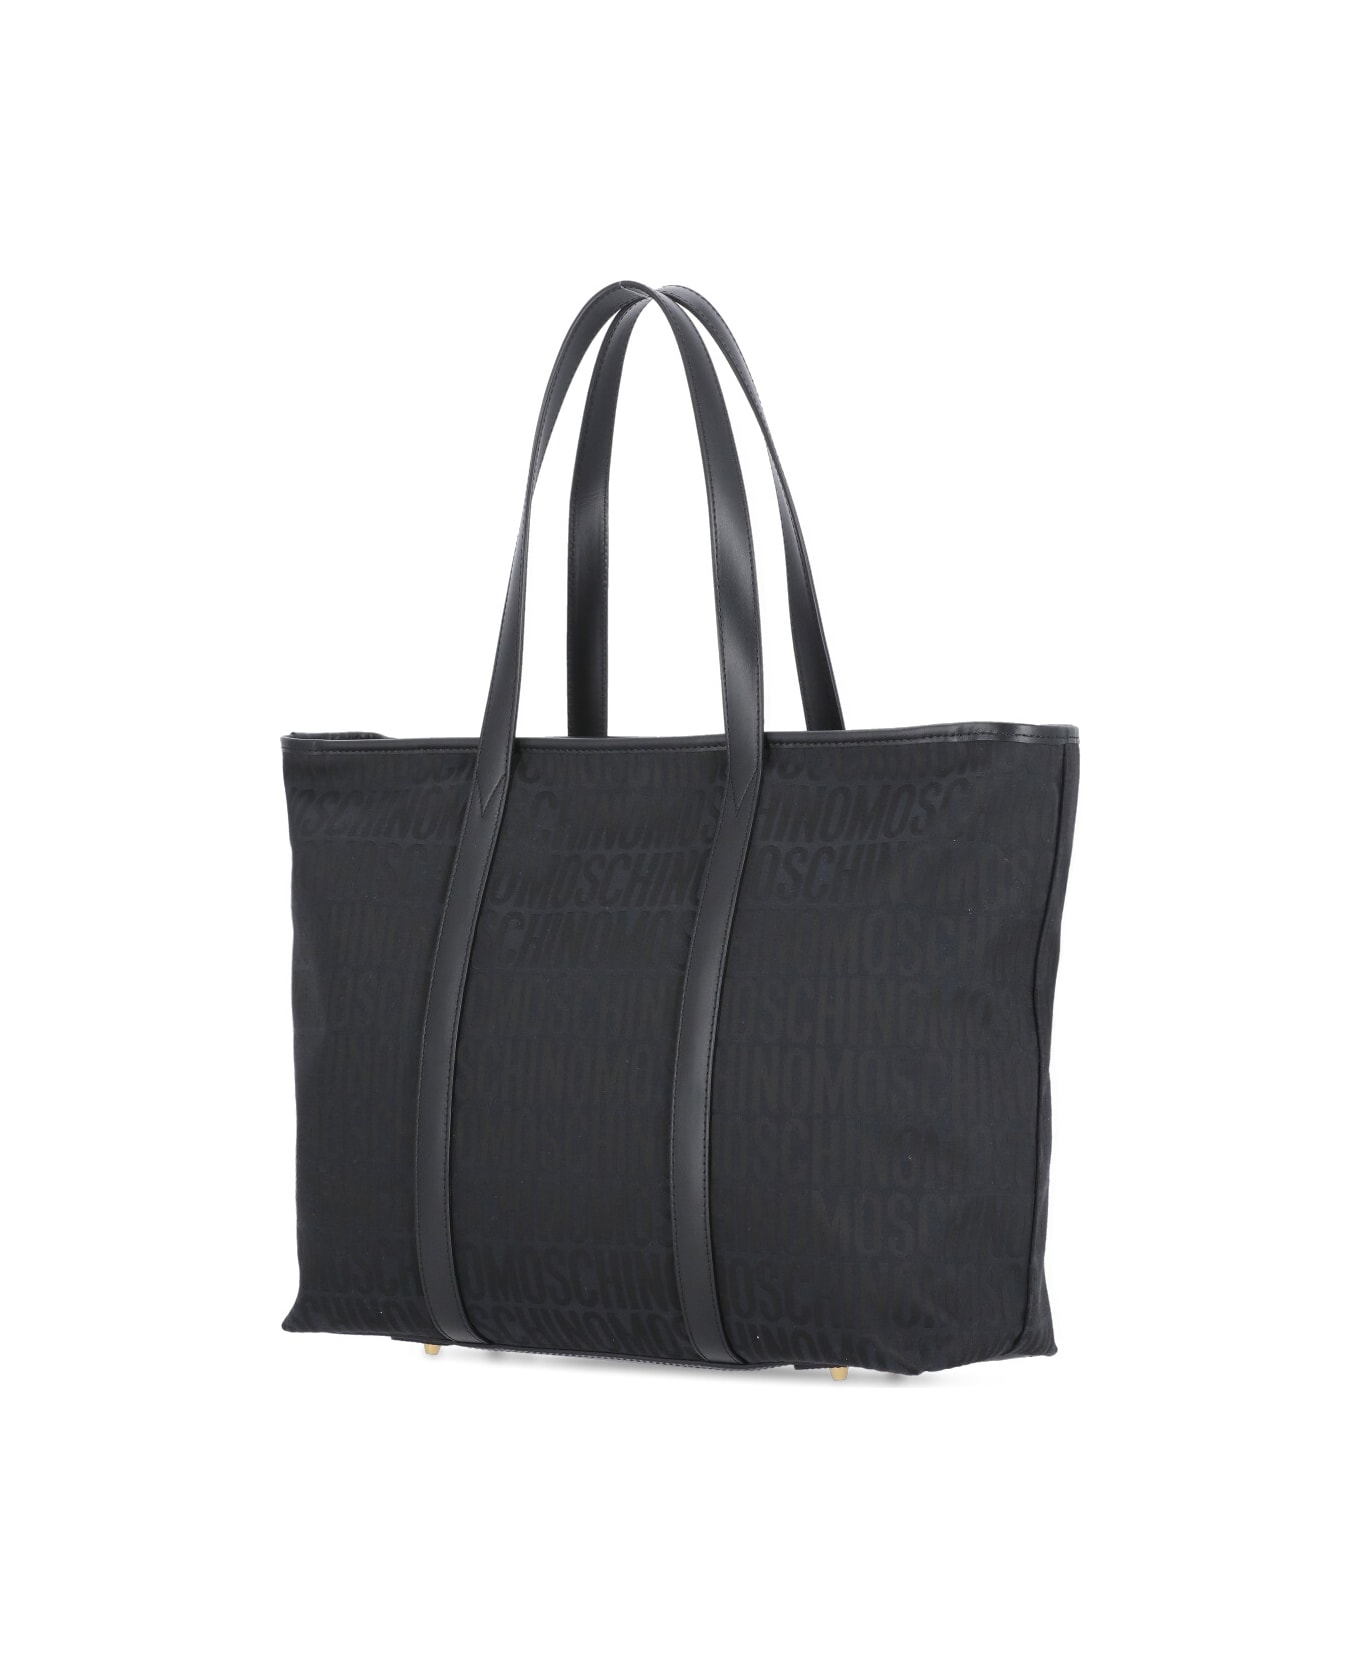 Moschino Shopping Bag With Logo - Black